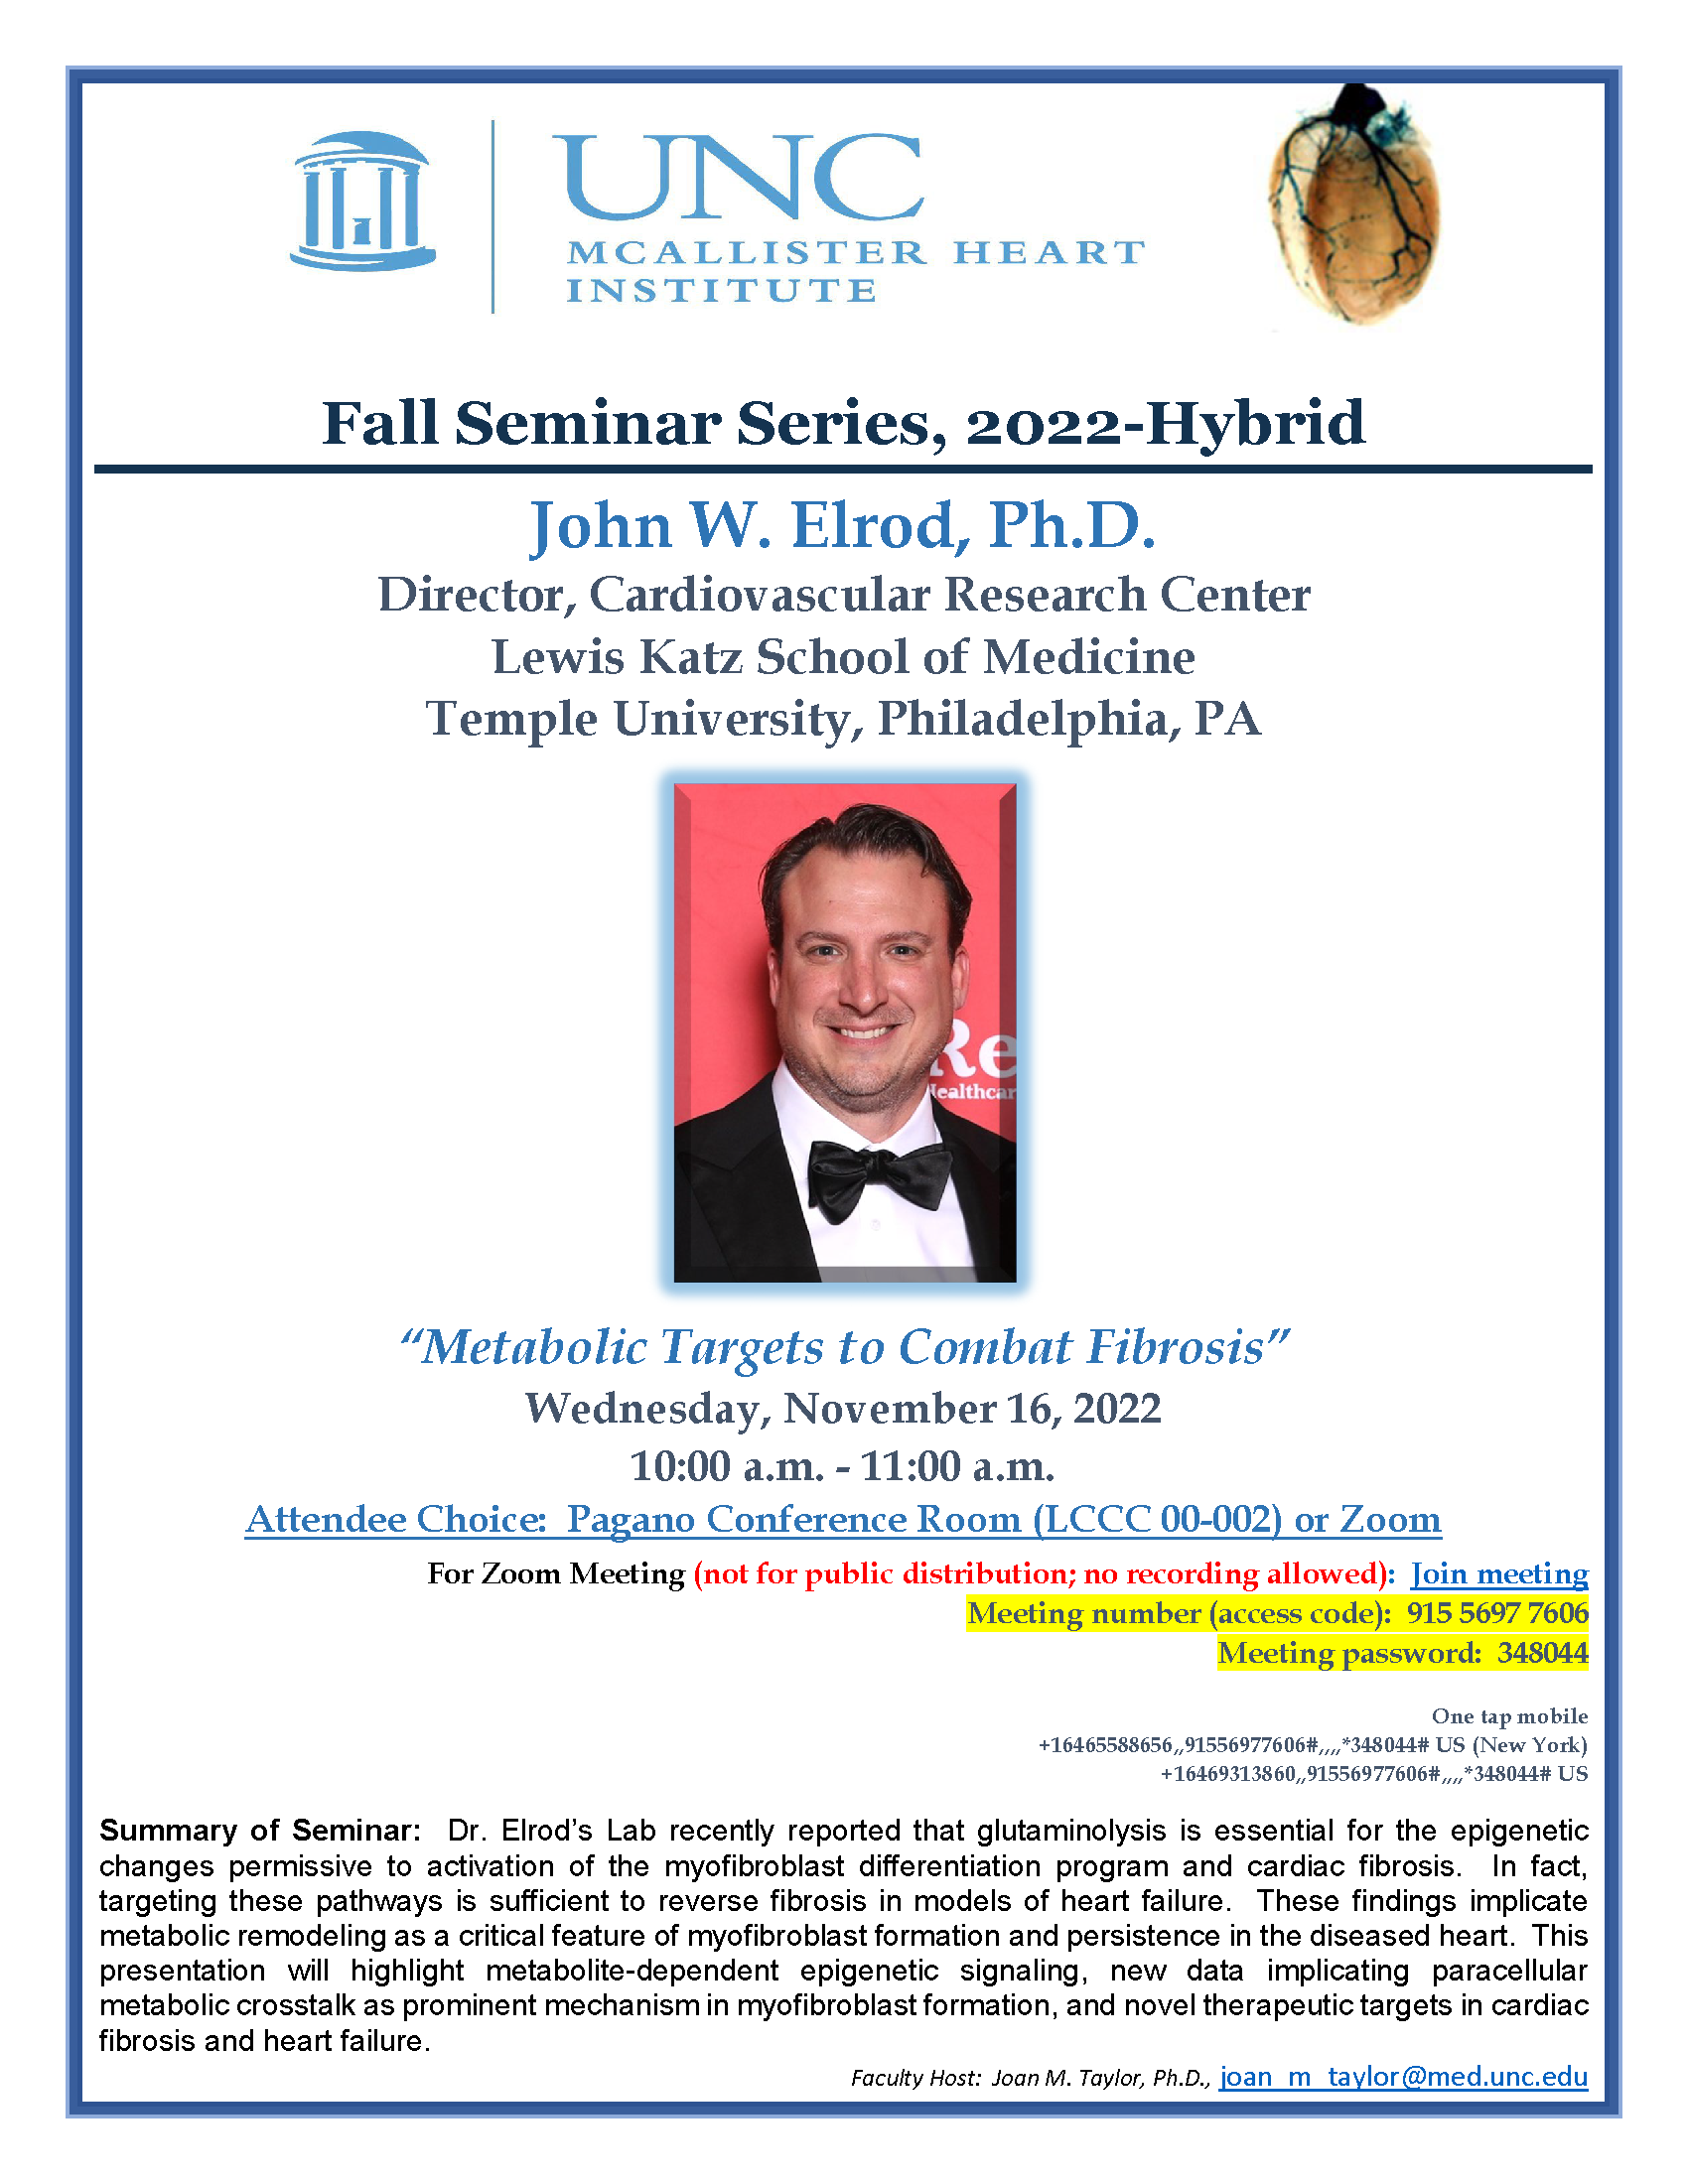 John W. Elrod, Ph.D.